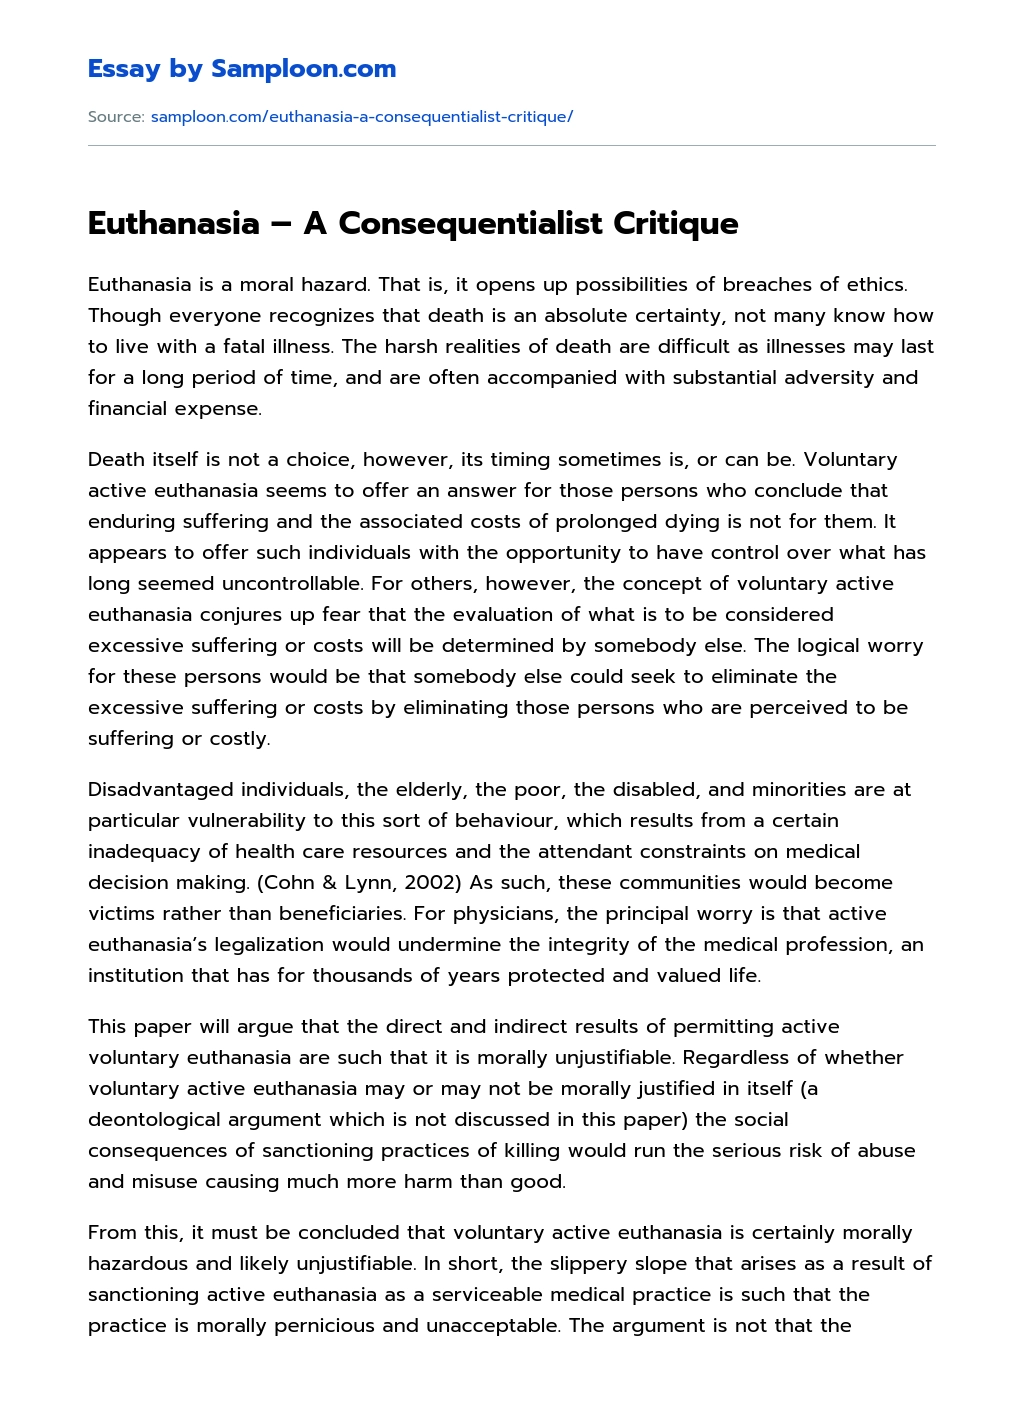 Euthanasia – A Consequentialist Critique essay